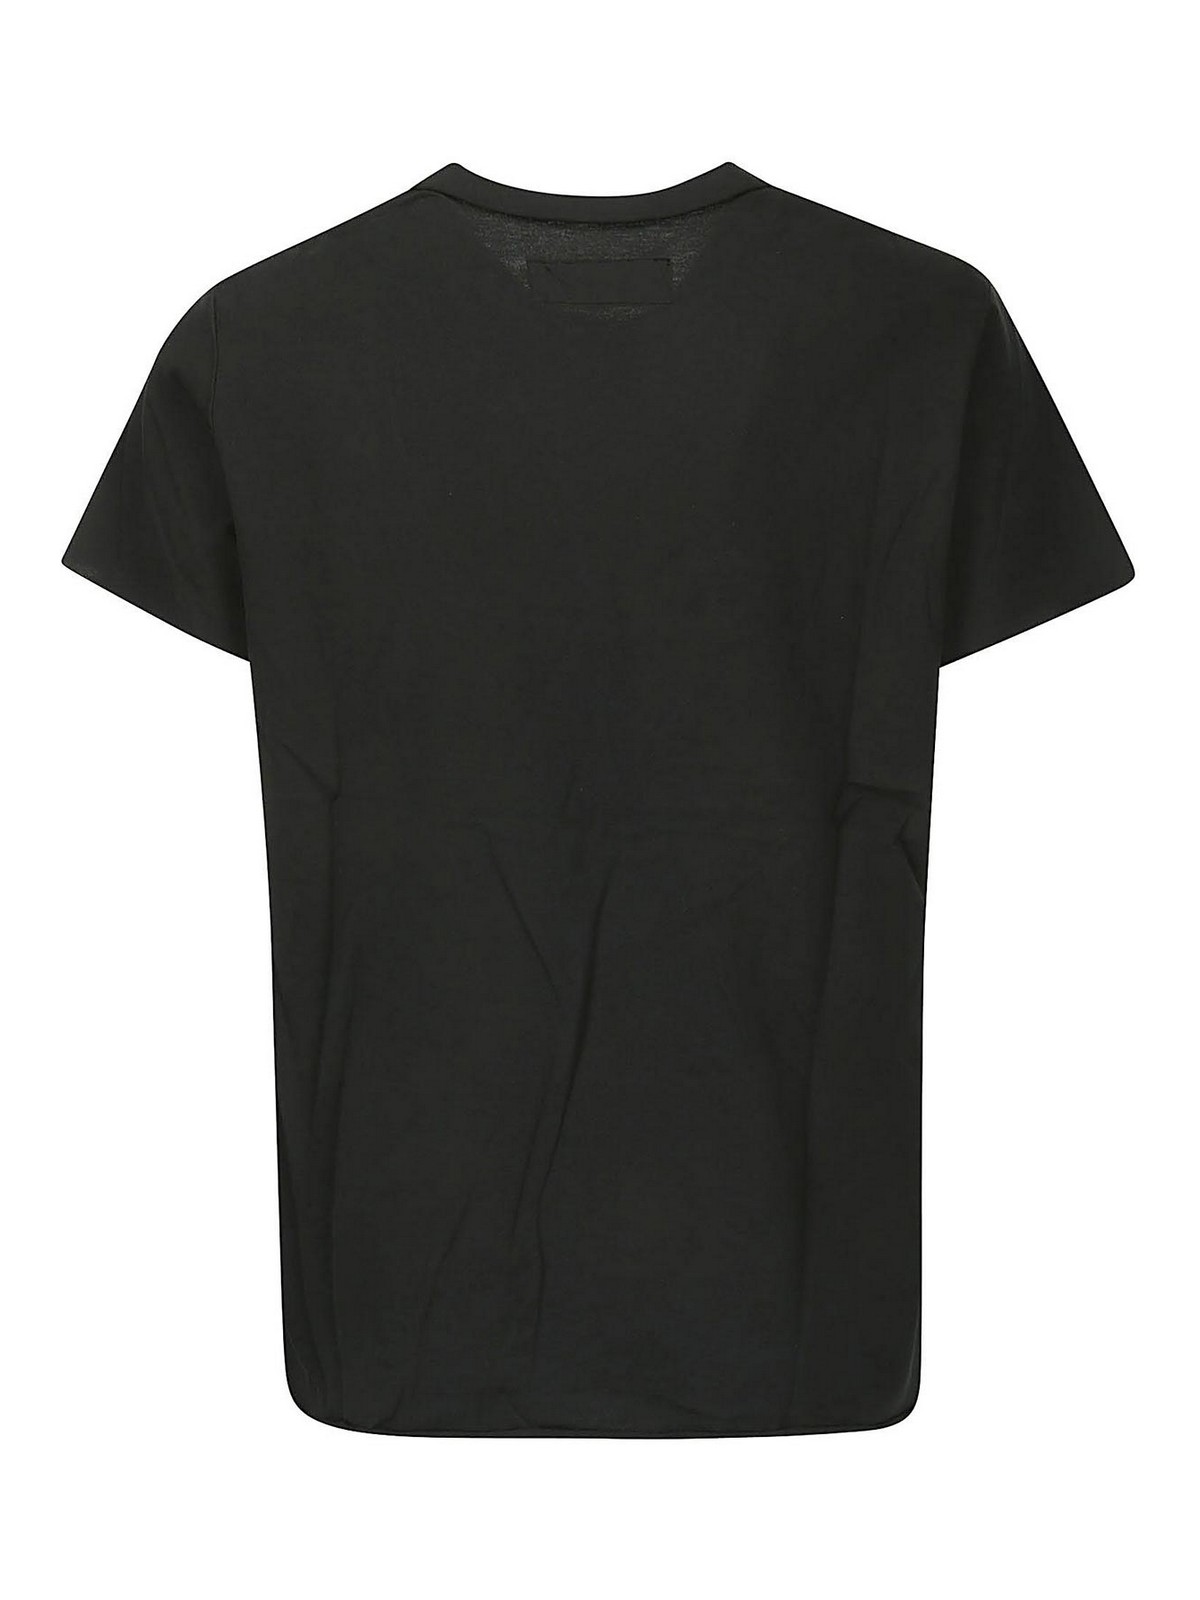 Shop Labo.art Crew Neck T-shirt In Black